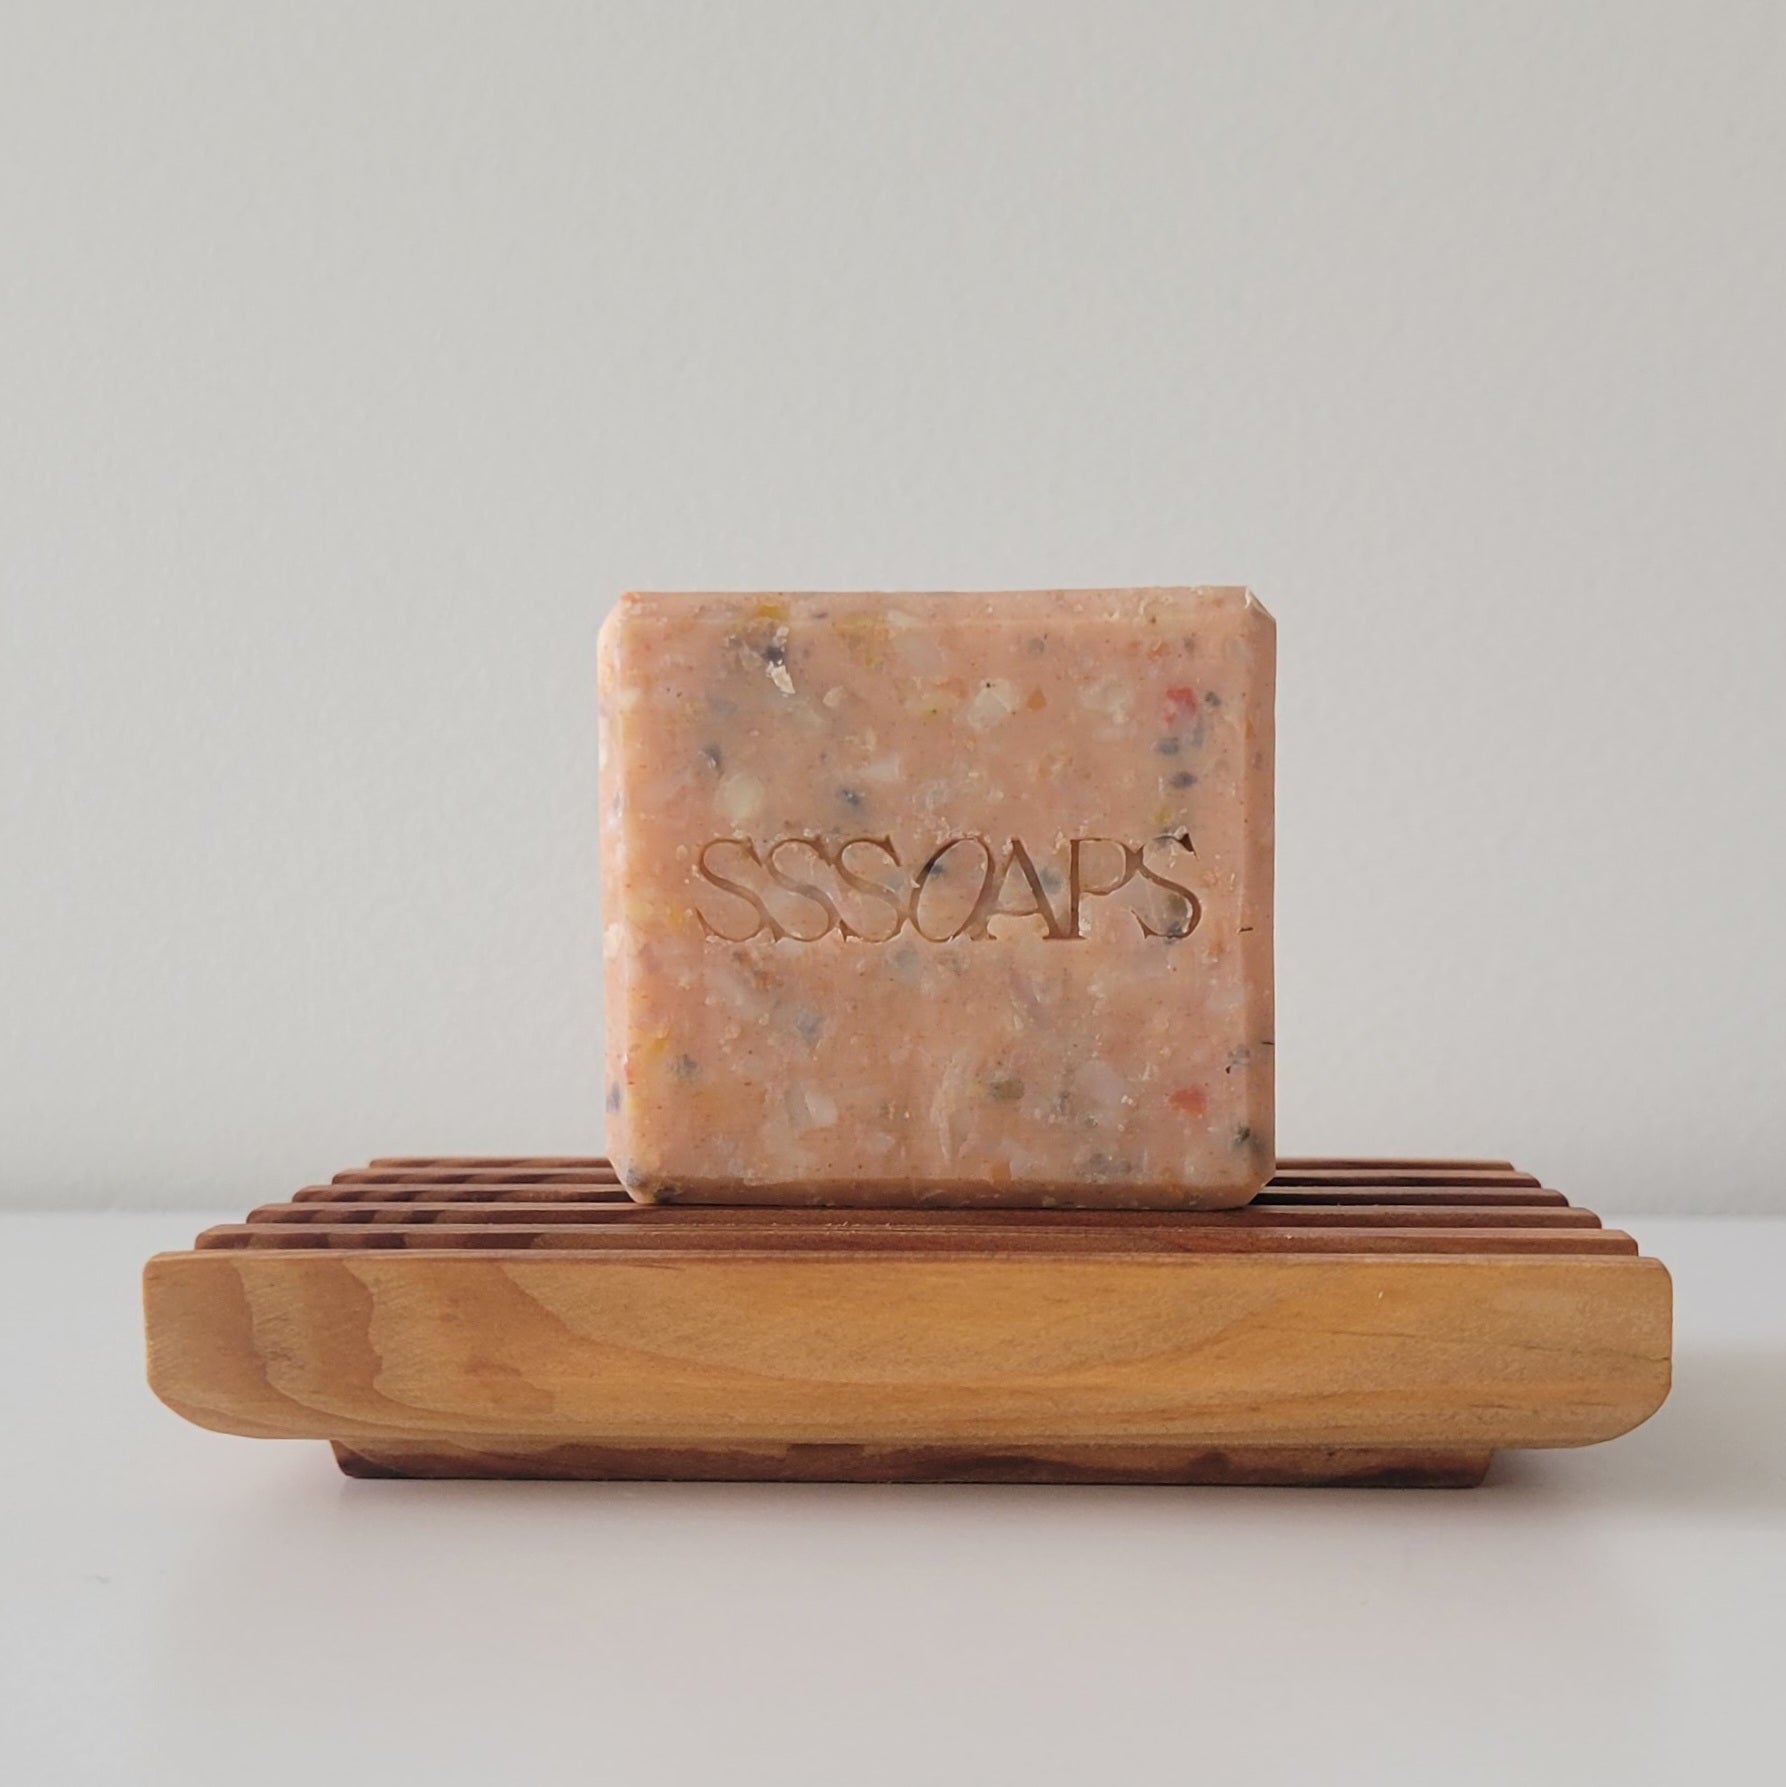 SSSOAPS - Batch 90 Soap